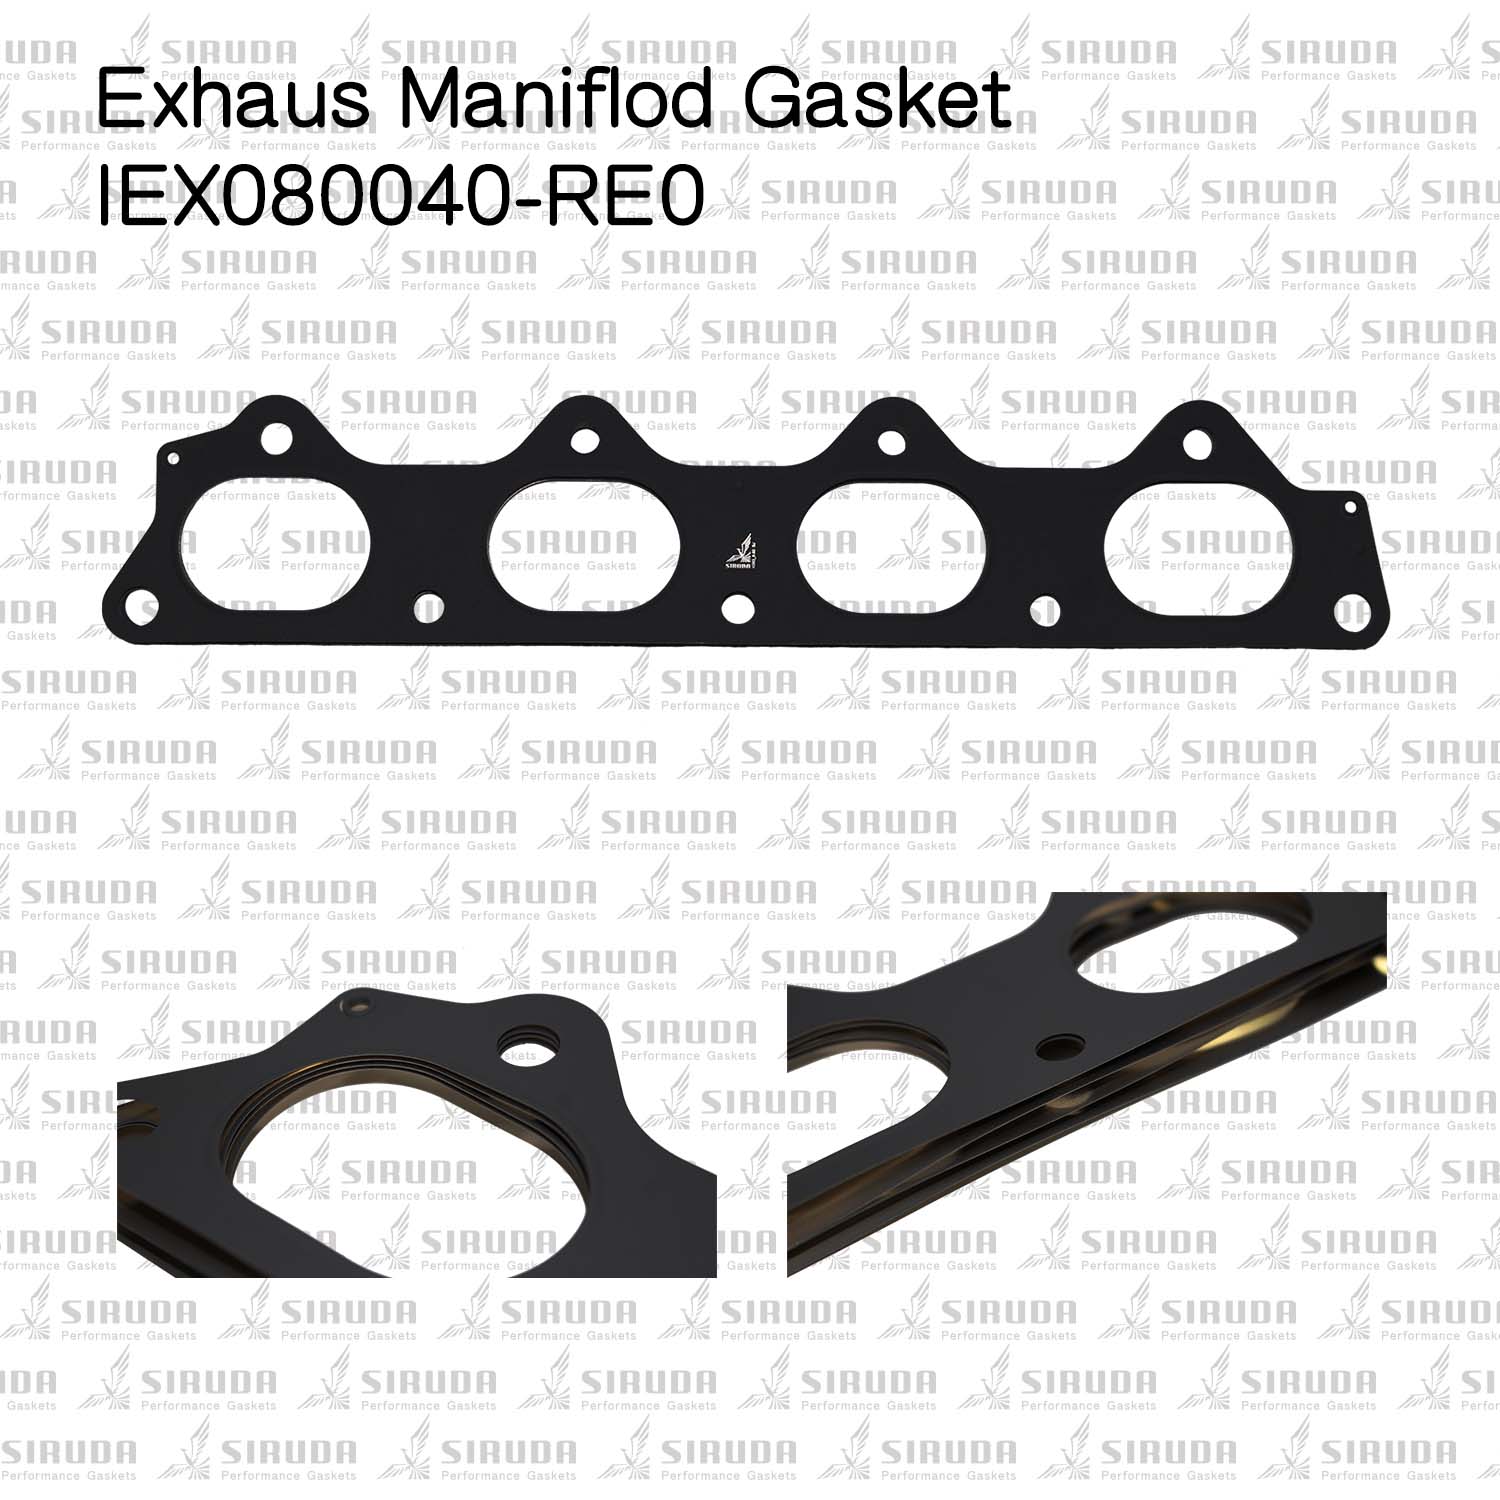 SIRUDA_Exhaust Manifold Gasket_MITSUBUSHI_4G63T